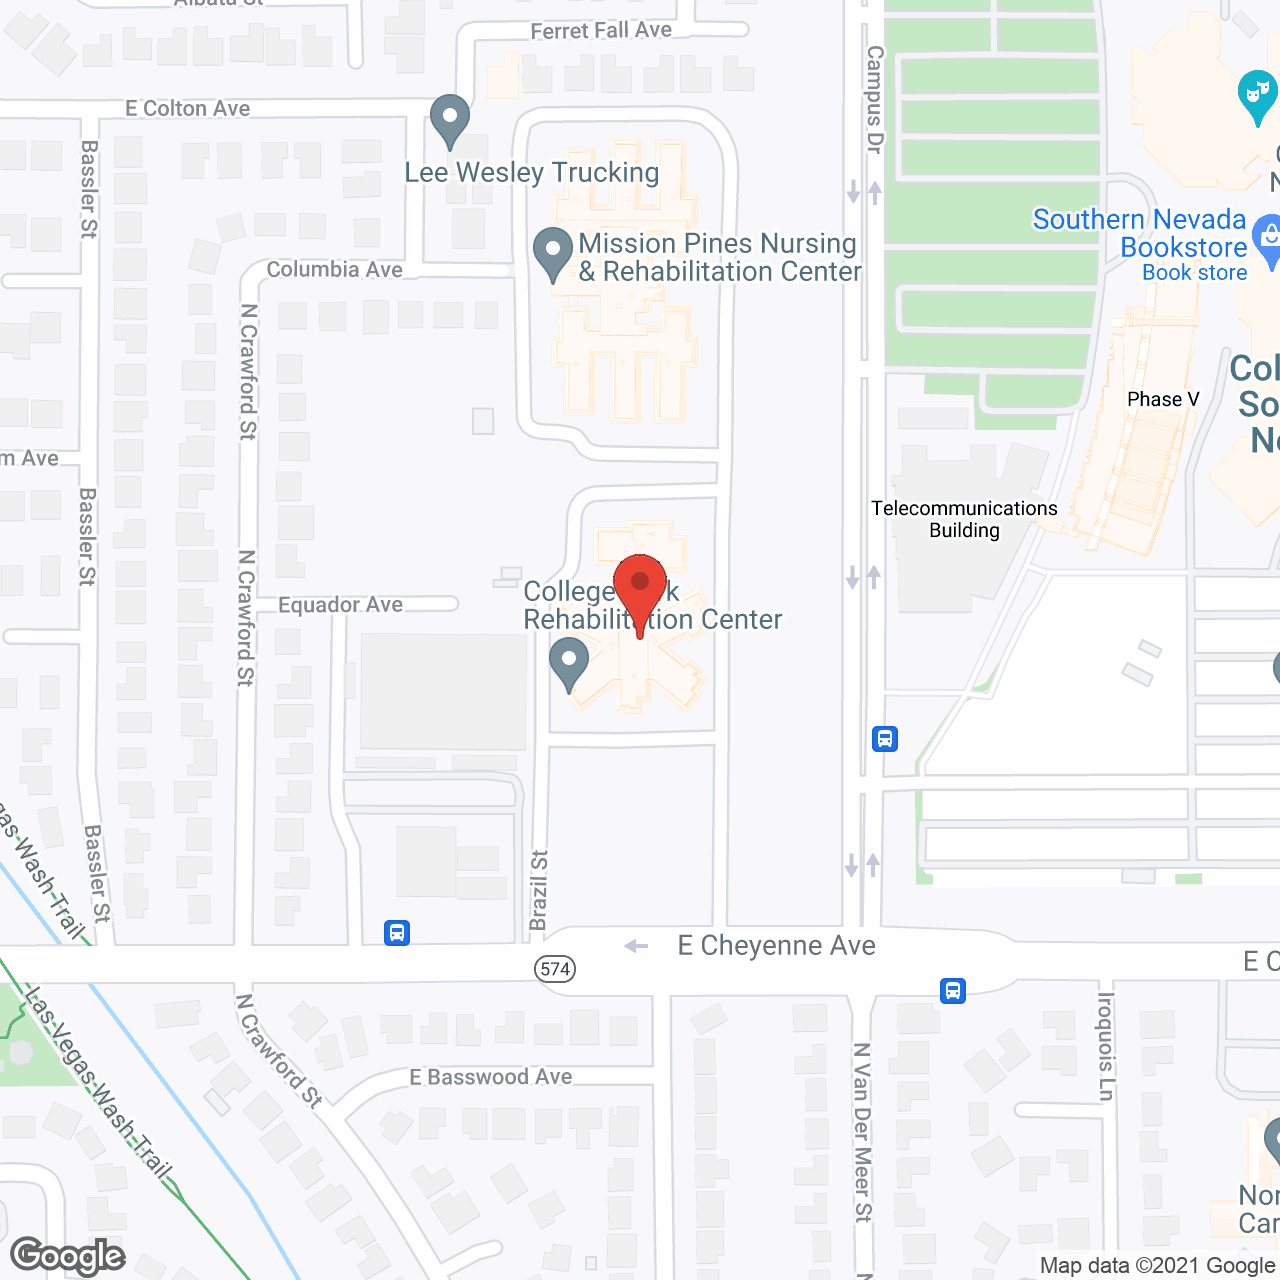 College Park Rehabilitation Center in google map